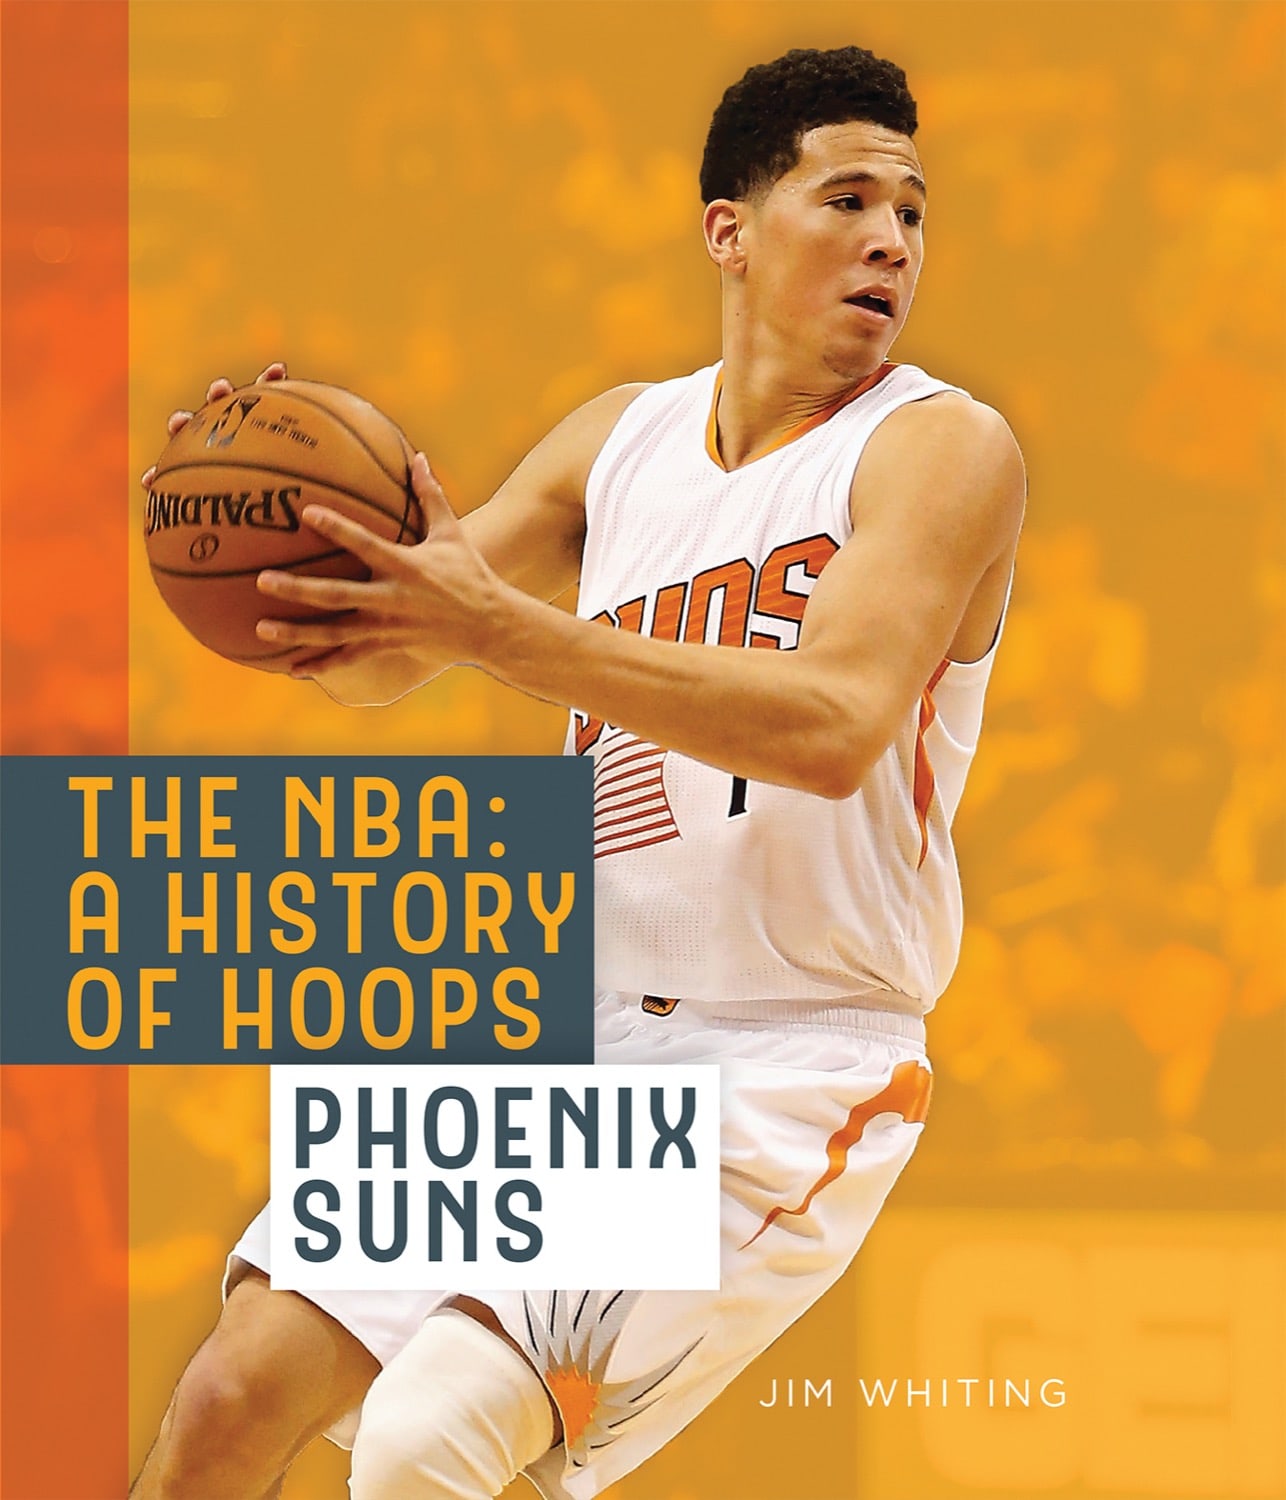 The NBA: A History of Hoops: Phoenix Suns